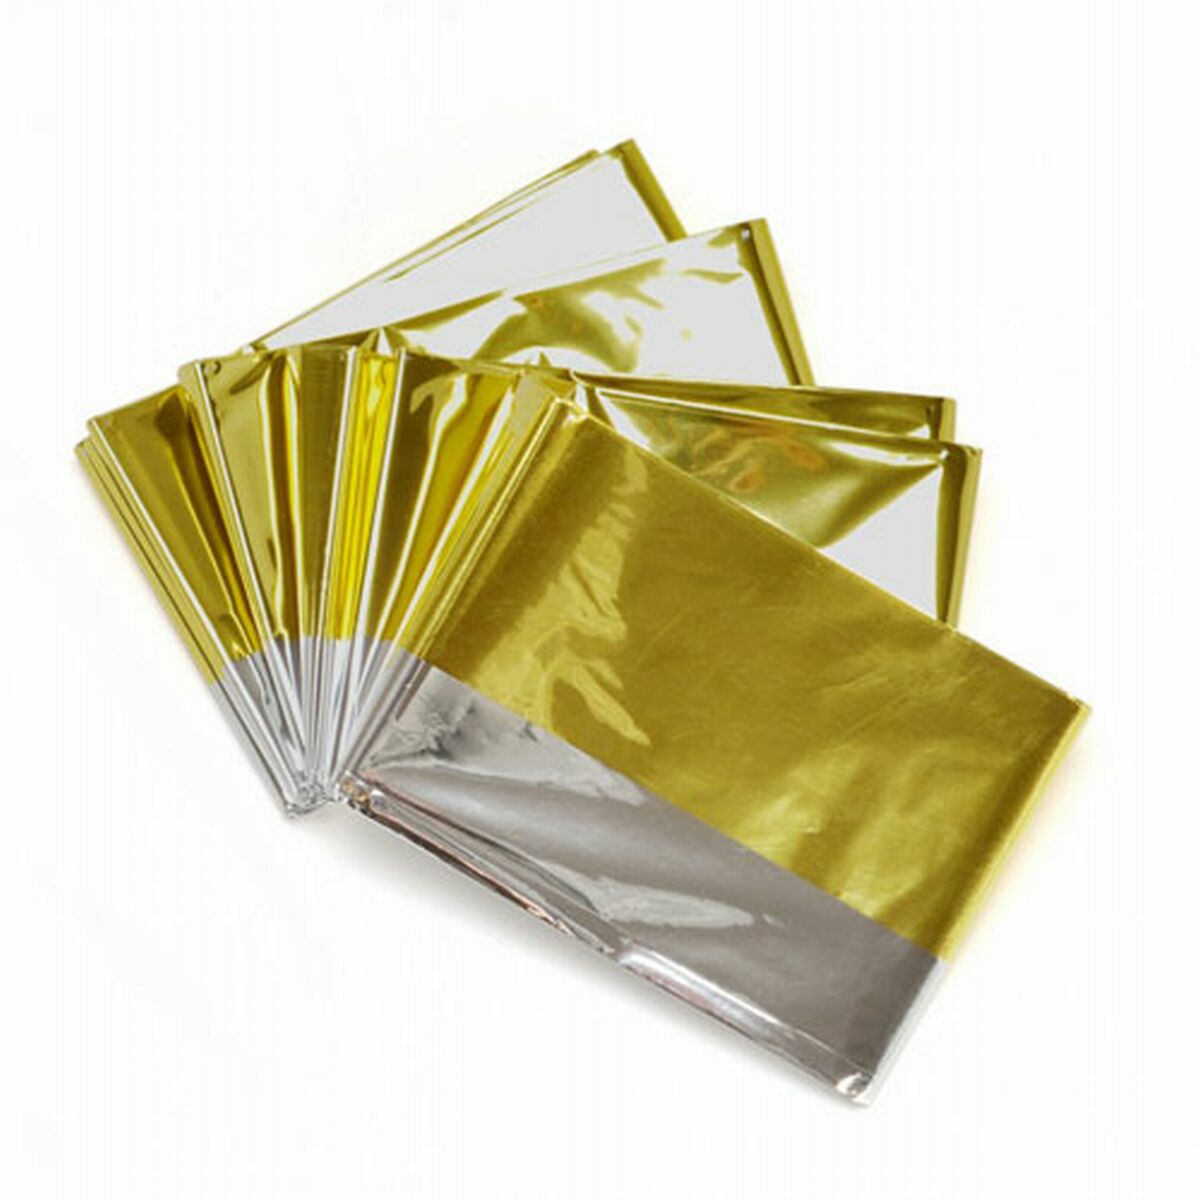 K.57 Rettungsdecke, gold/silber, aluminiumbedampfte Folie